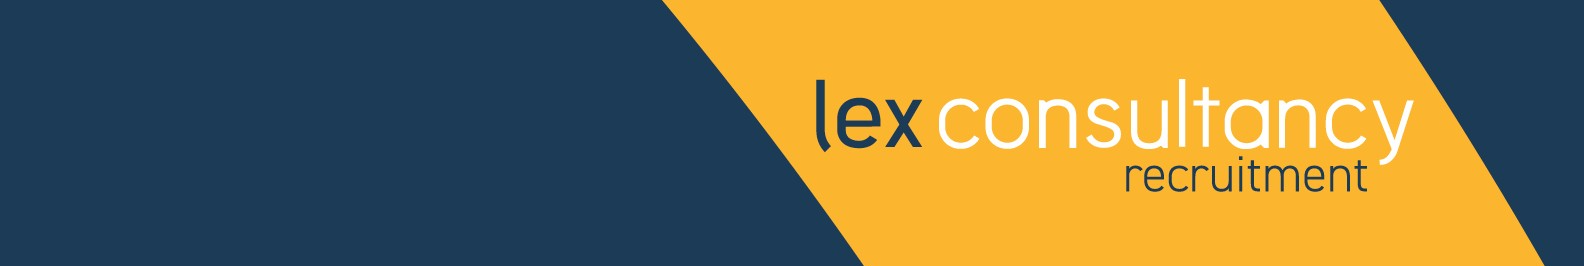 lex consultancy background